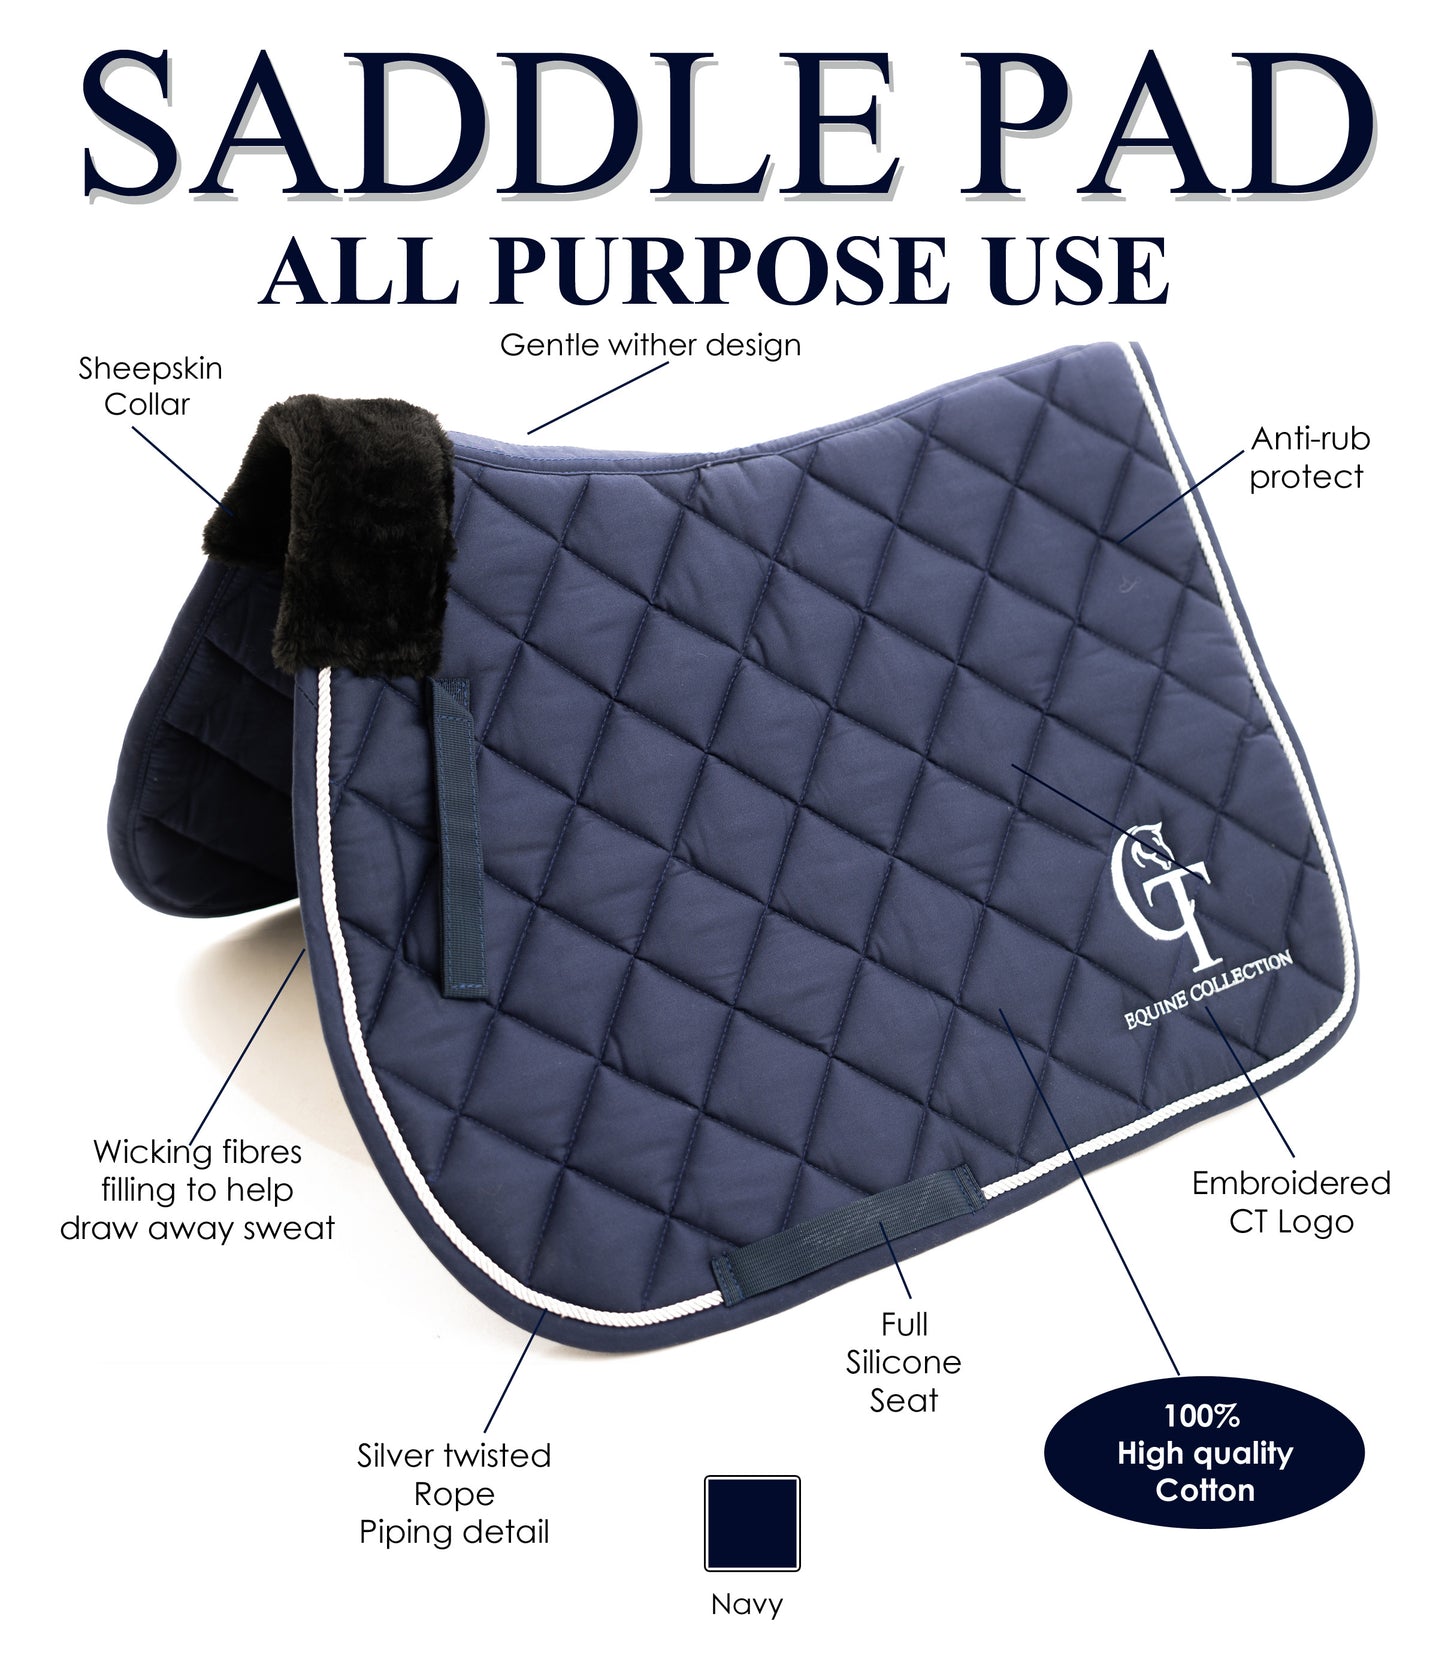 
                  
                    Saddle Pad - General Purpose  - Navy
                  
                